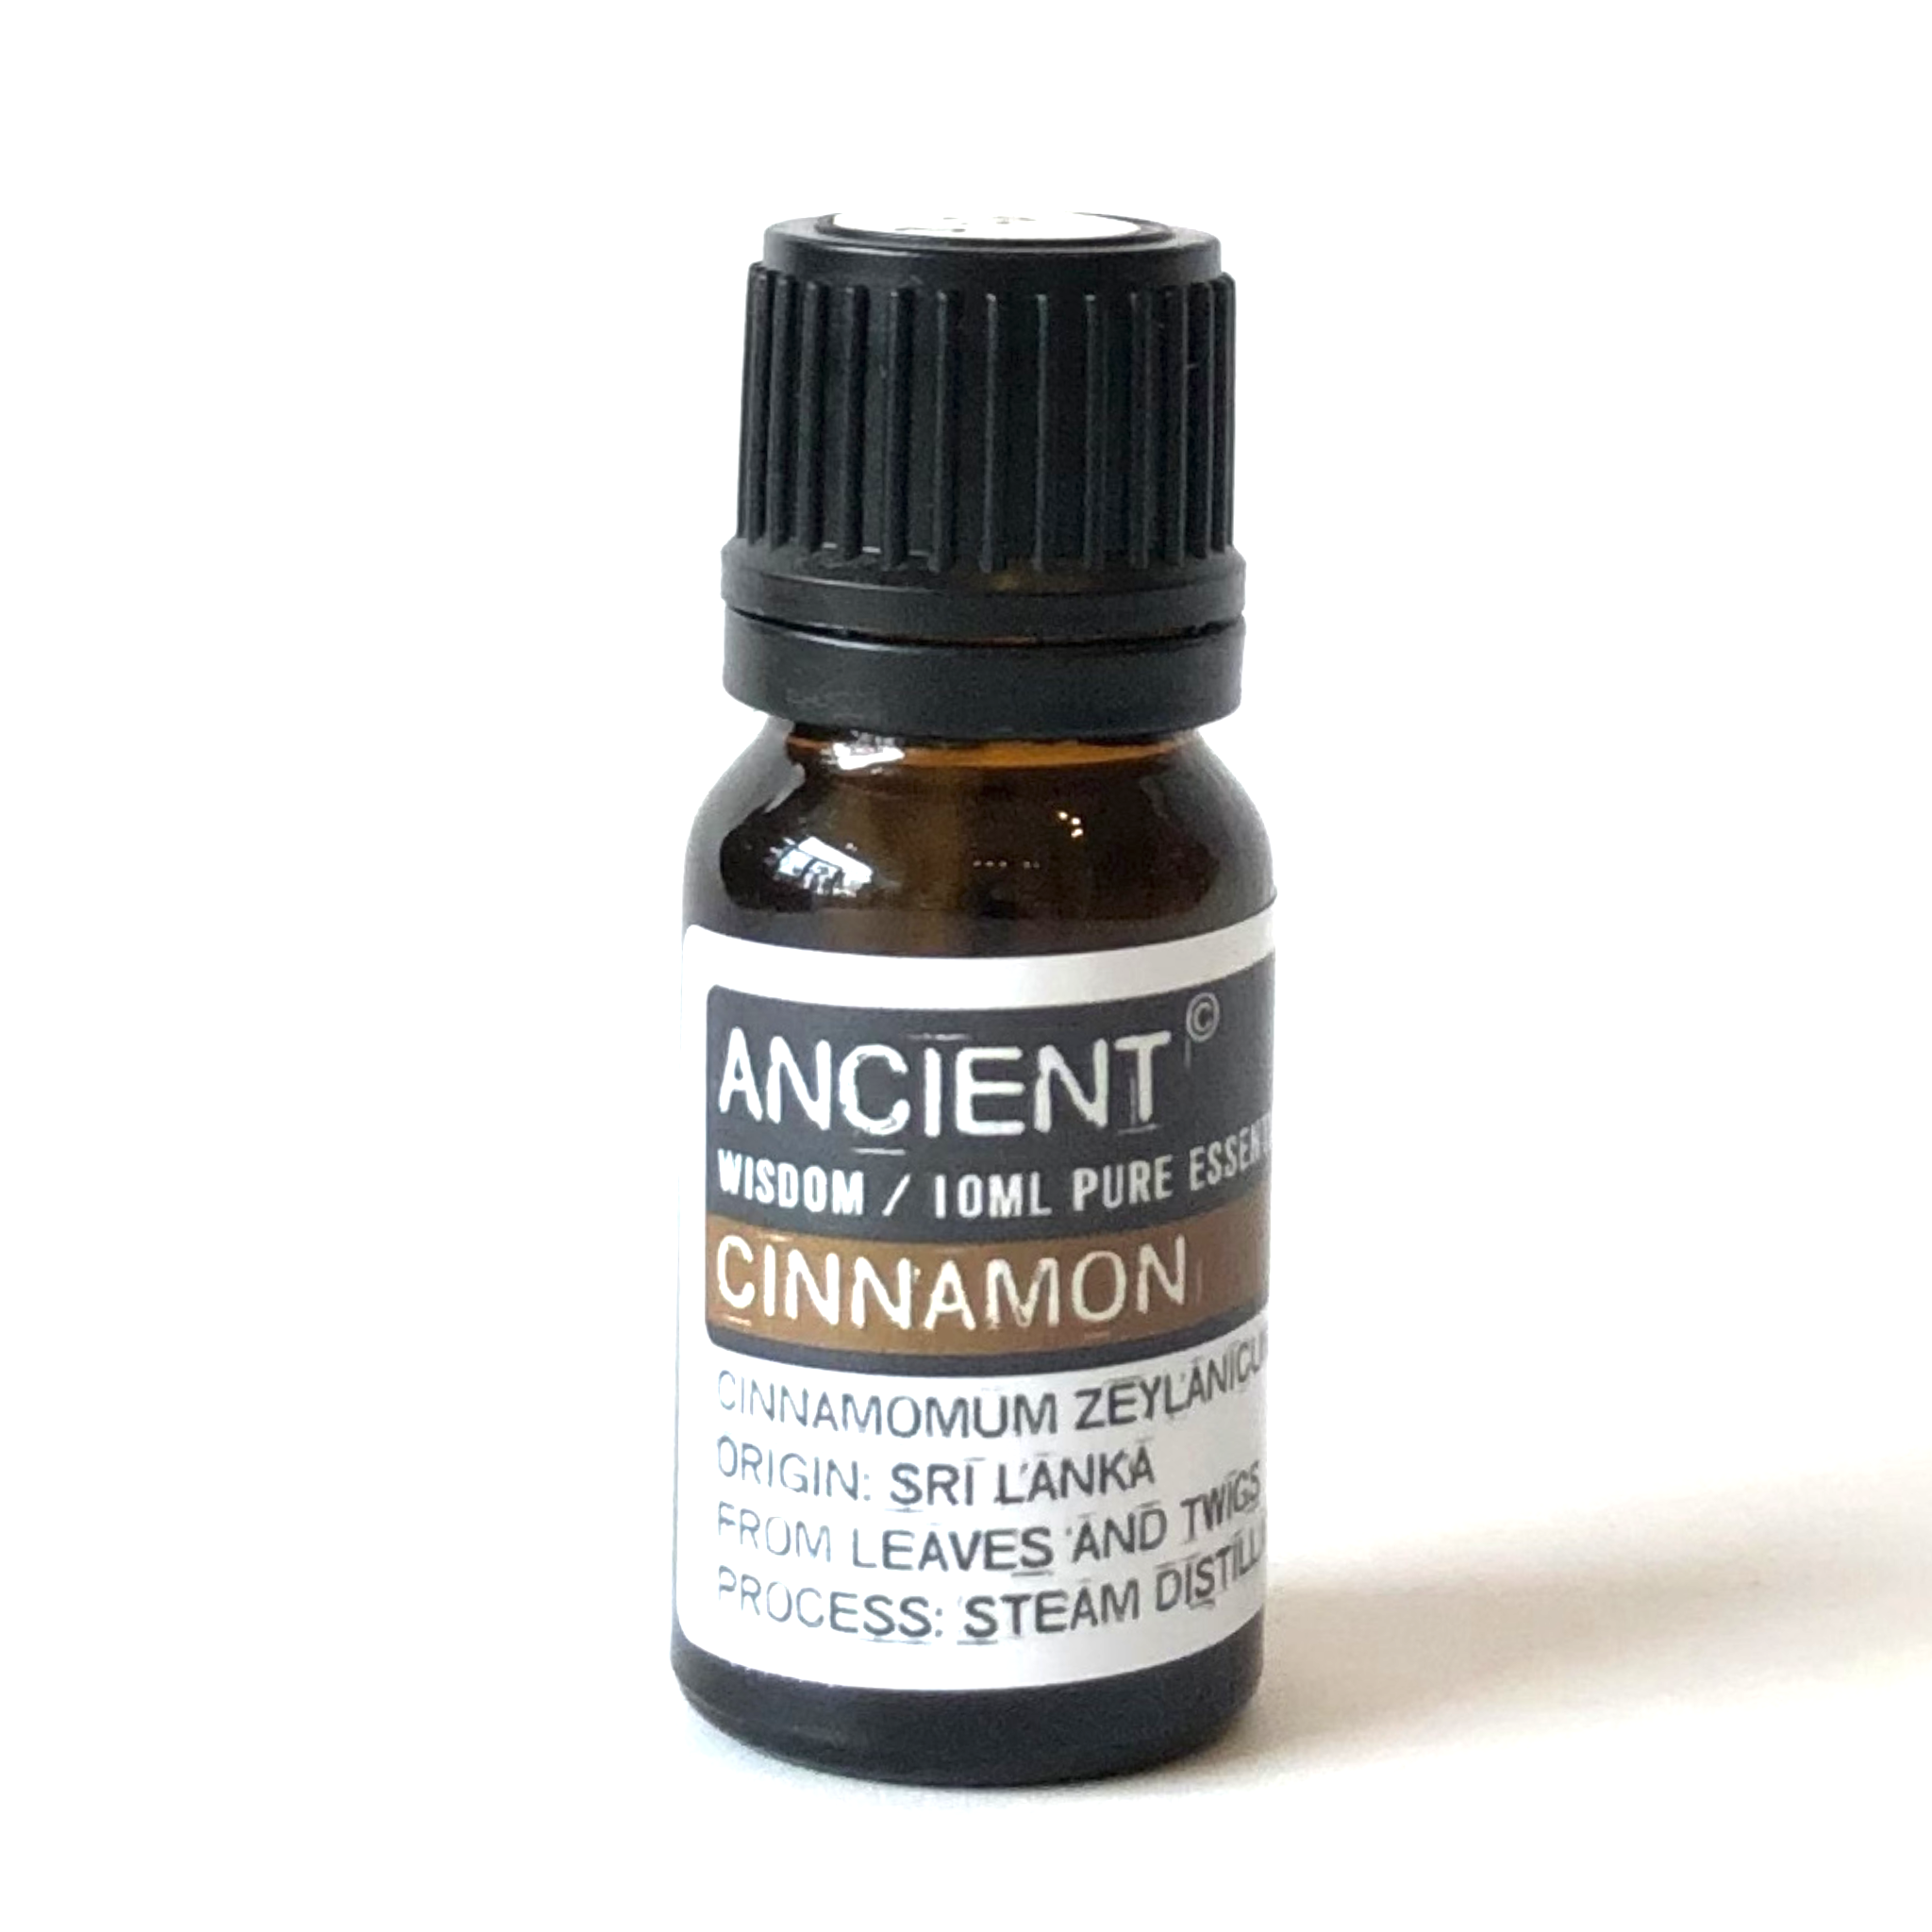 Cinnamon Essential Oil 10ml